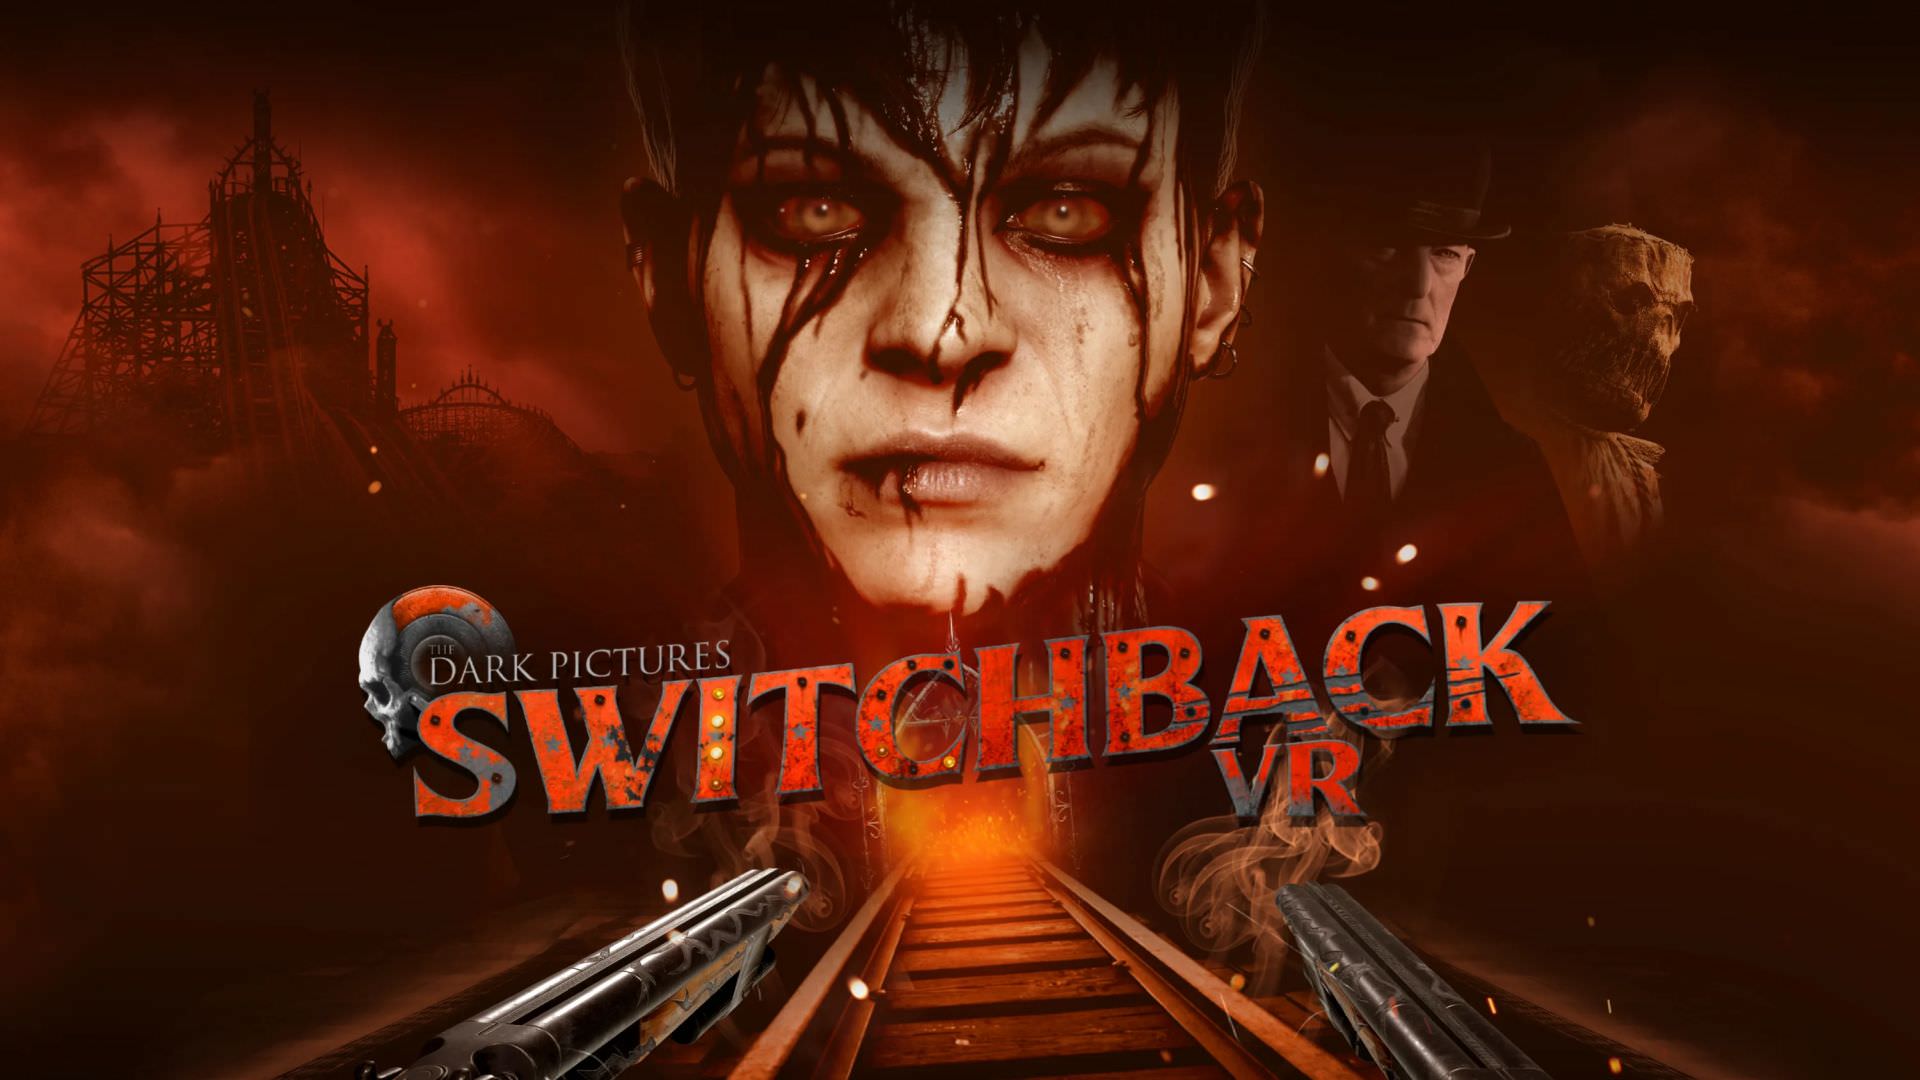 اعلام تاریخ انتشار بازی The Dark Pictures: Switchback VR برای PSVR2